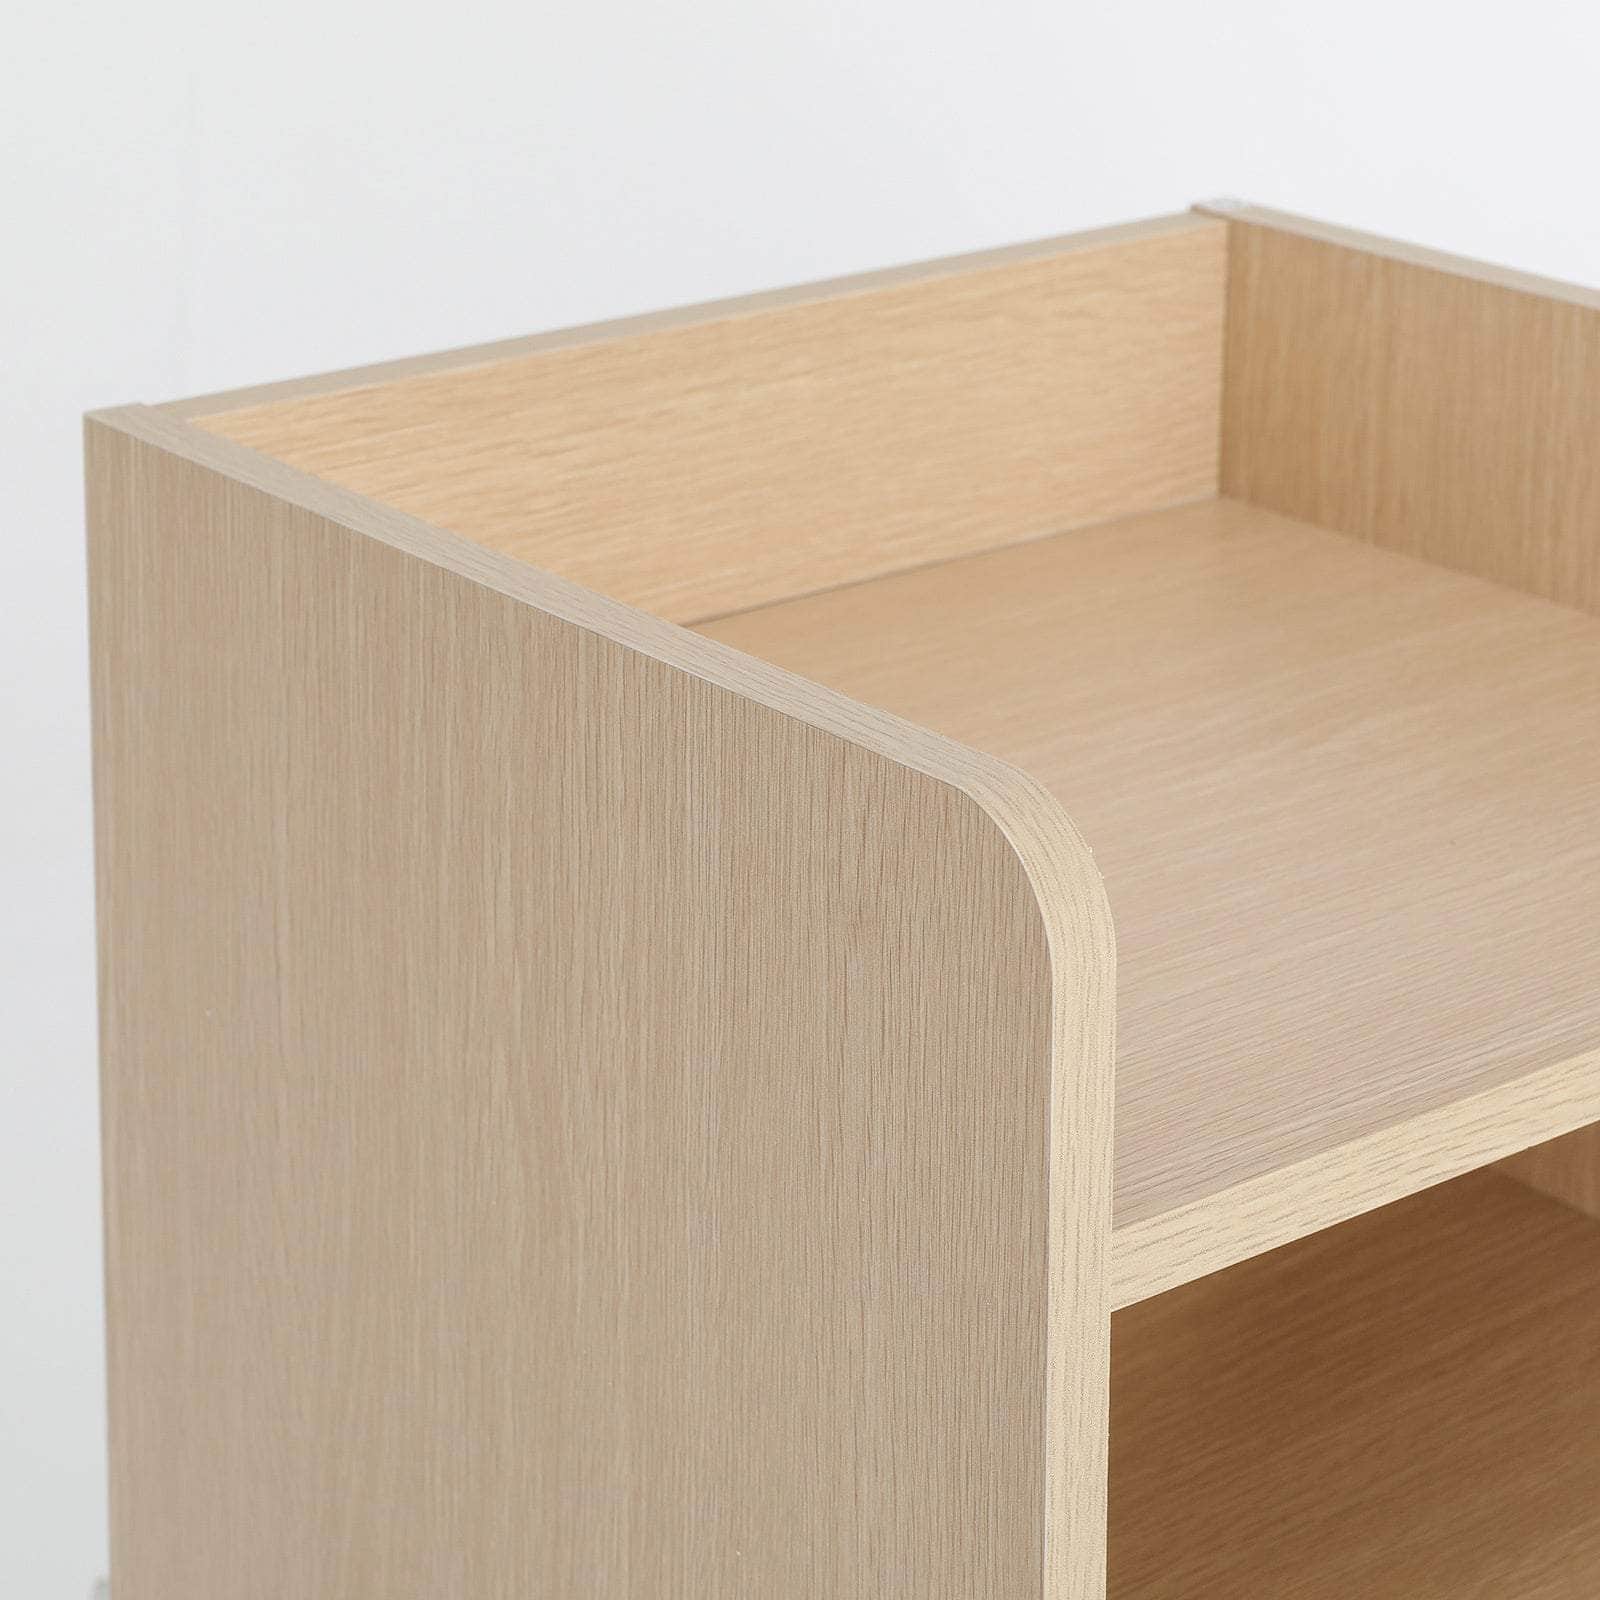 Lark Oak: Bedroom Nightstand With Drawer And Shelves